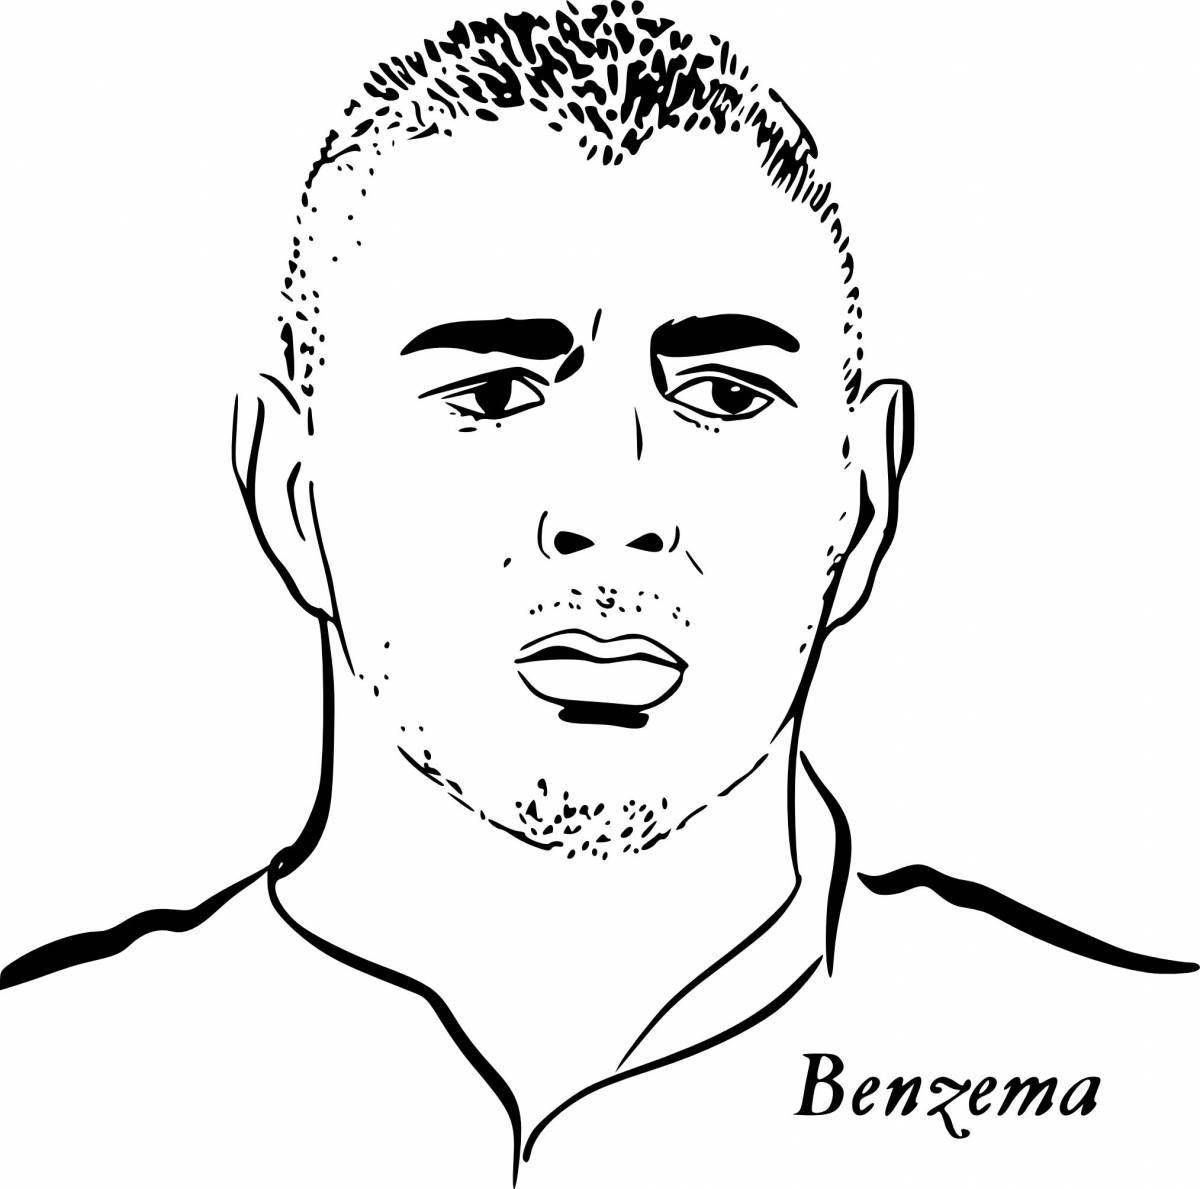 Benzema#8